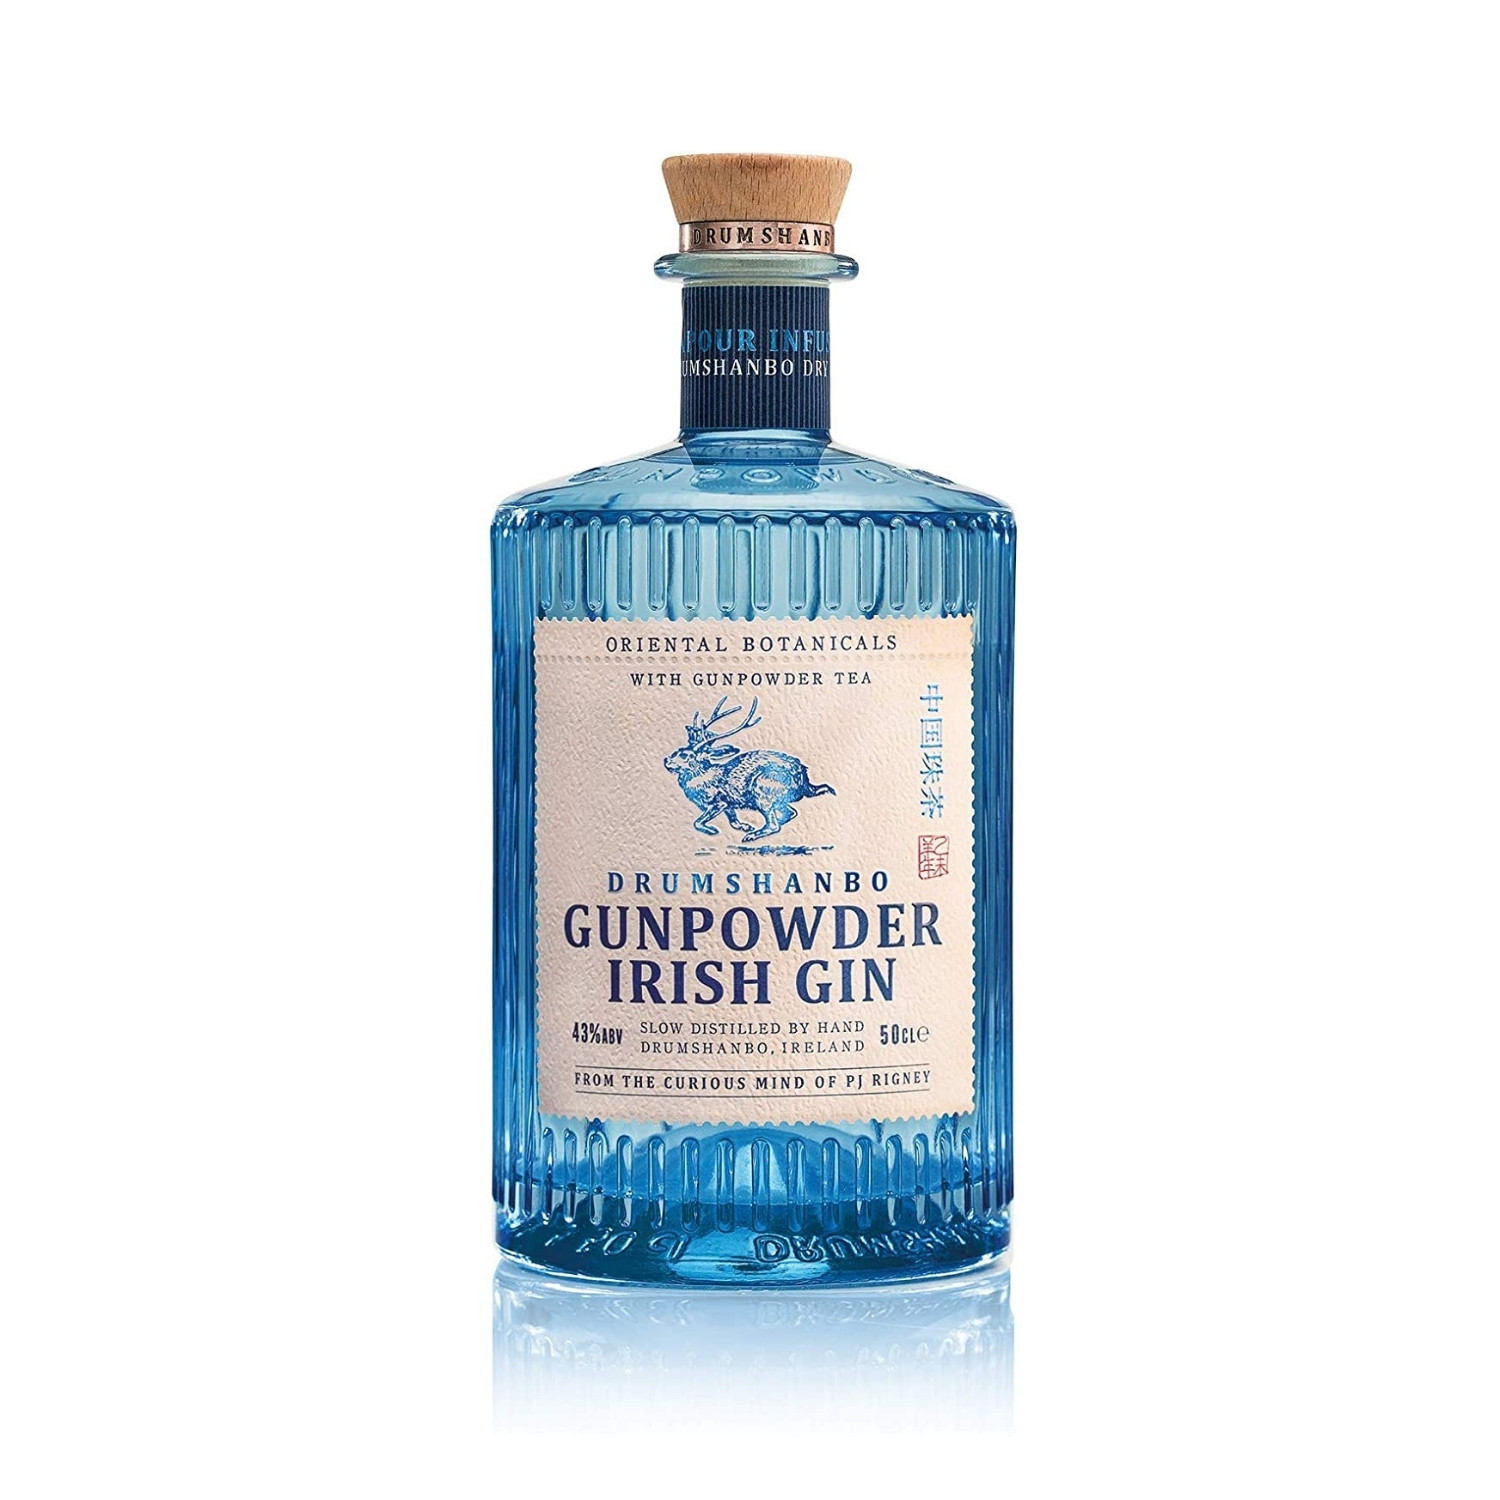 Gin Drumshanbo Gunpowder Iris Gin